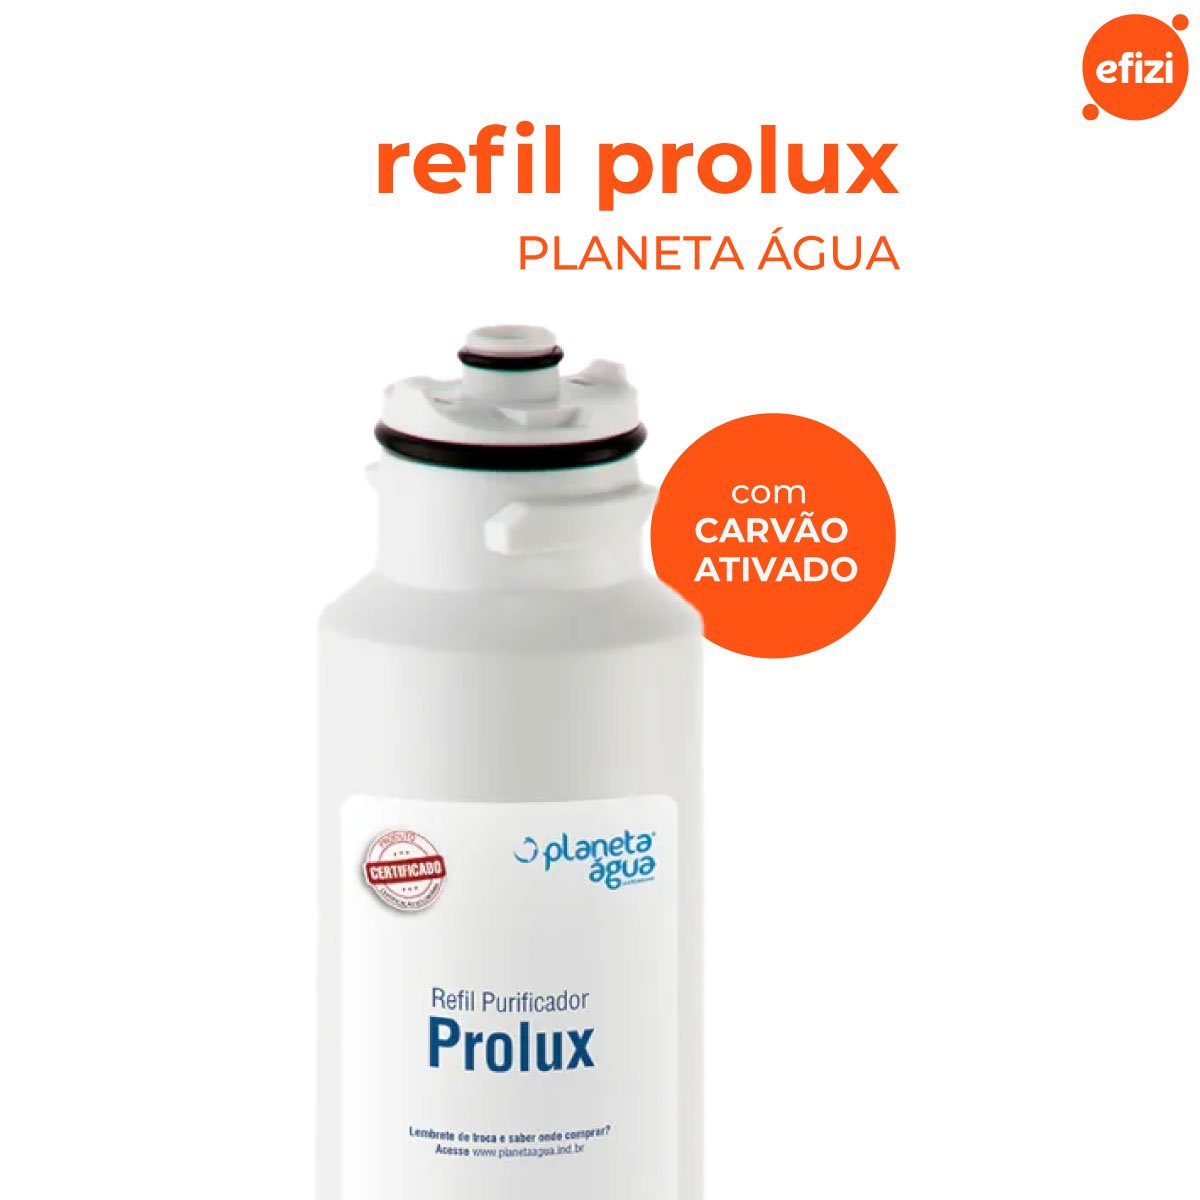 Refil Filtro Prolux para Purificador Eletrolux Planeta Água - 2